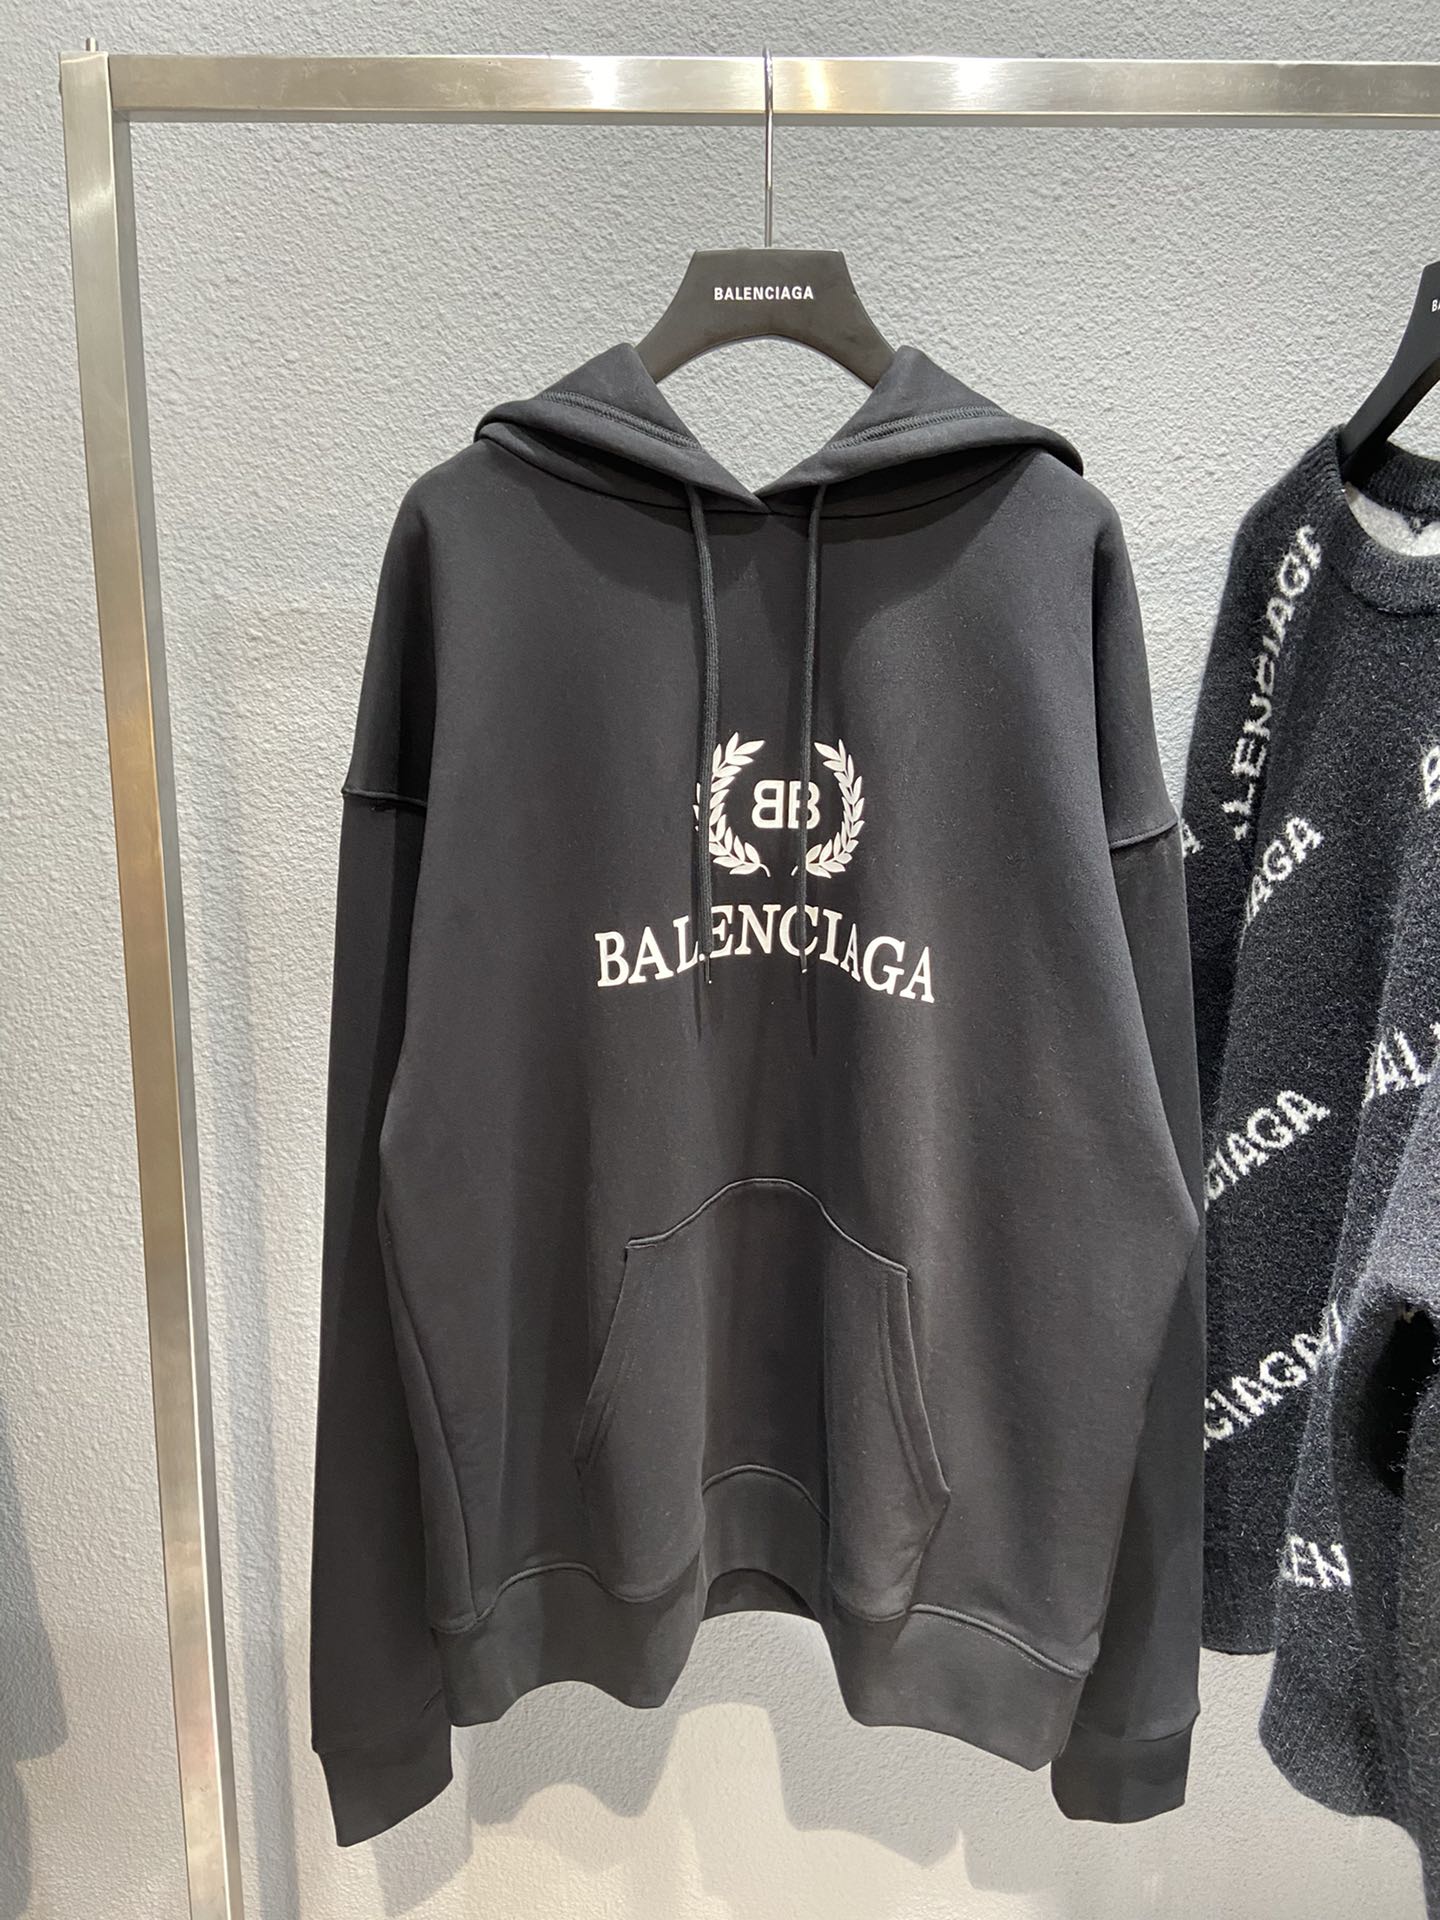 Balenciaga Hoodie WFP Supported by BALENCIAGAGreen color size M  eBay